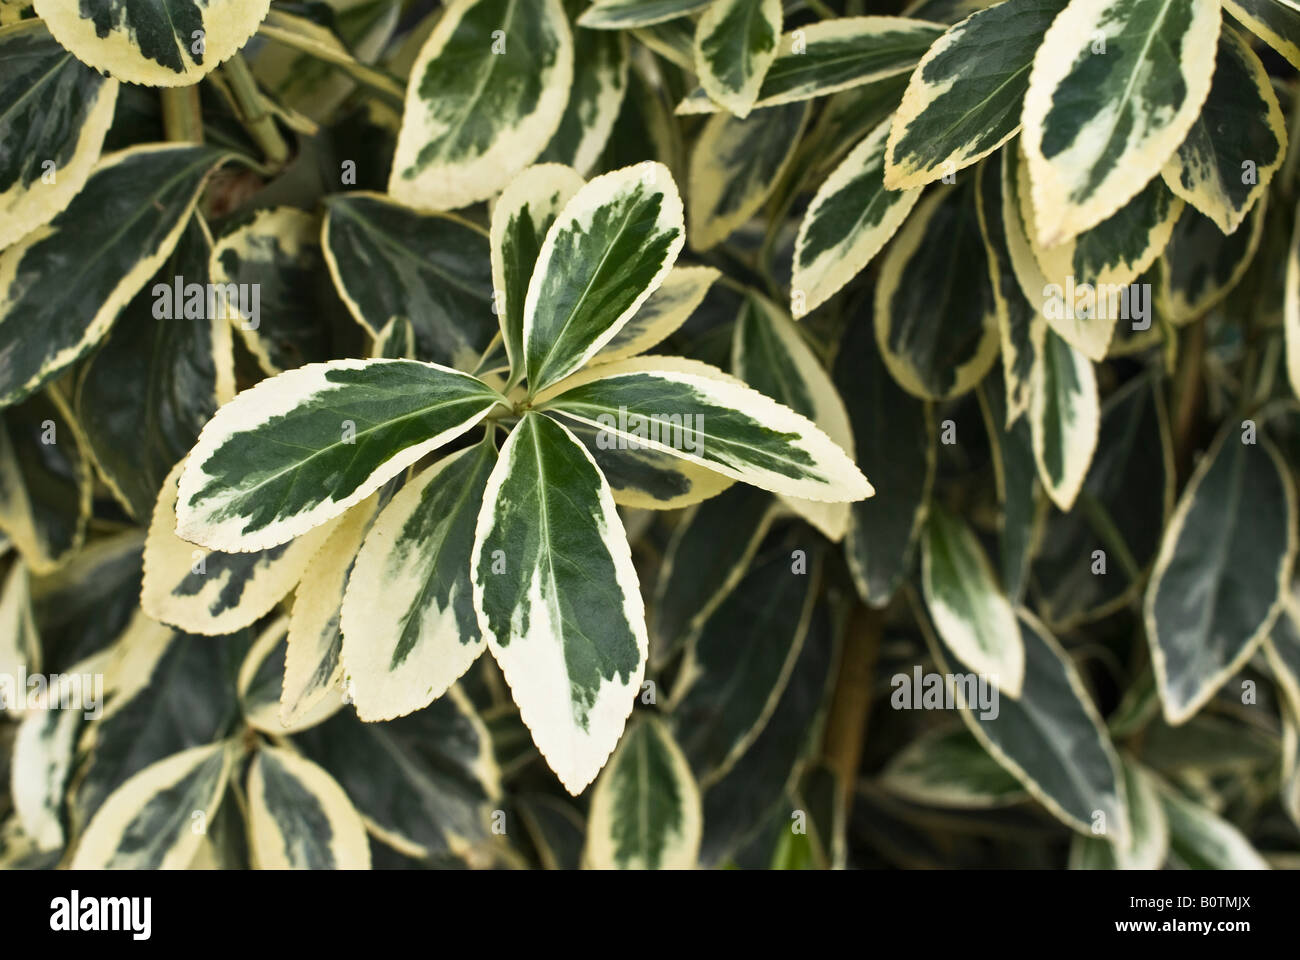 Variegated leaves of euonymus japonicus americanus shrub Stock Photo